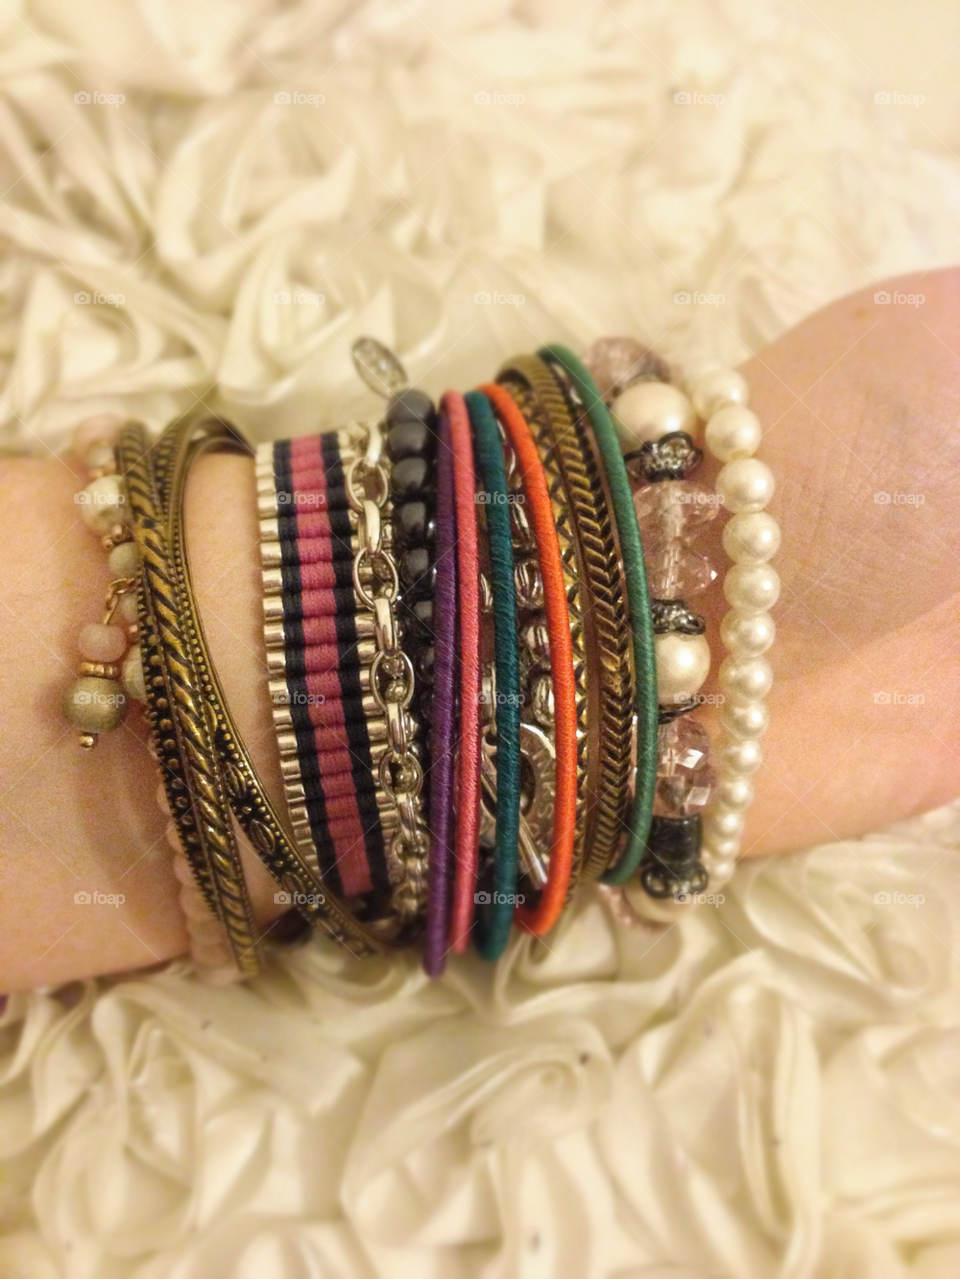 colourful bracelets bangles jewelery by CiaraSPx